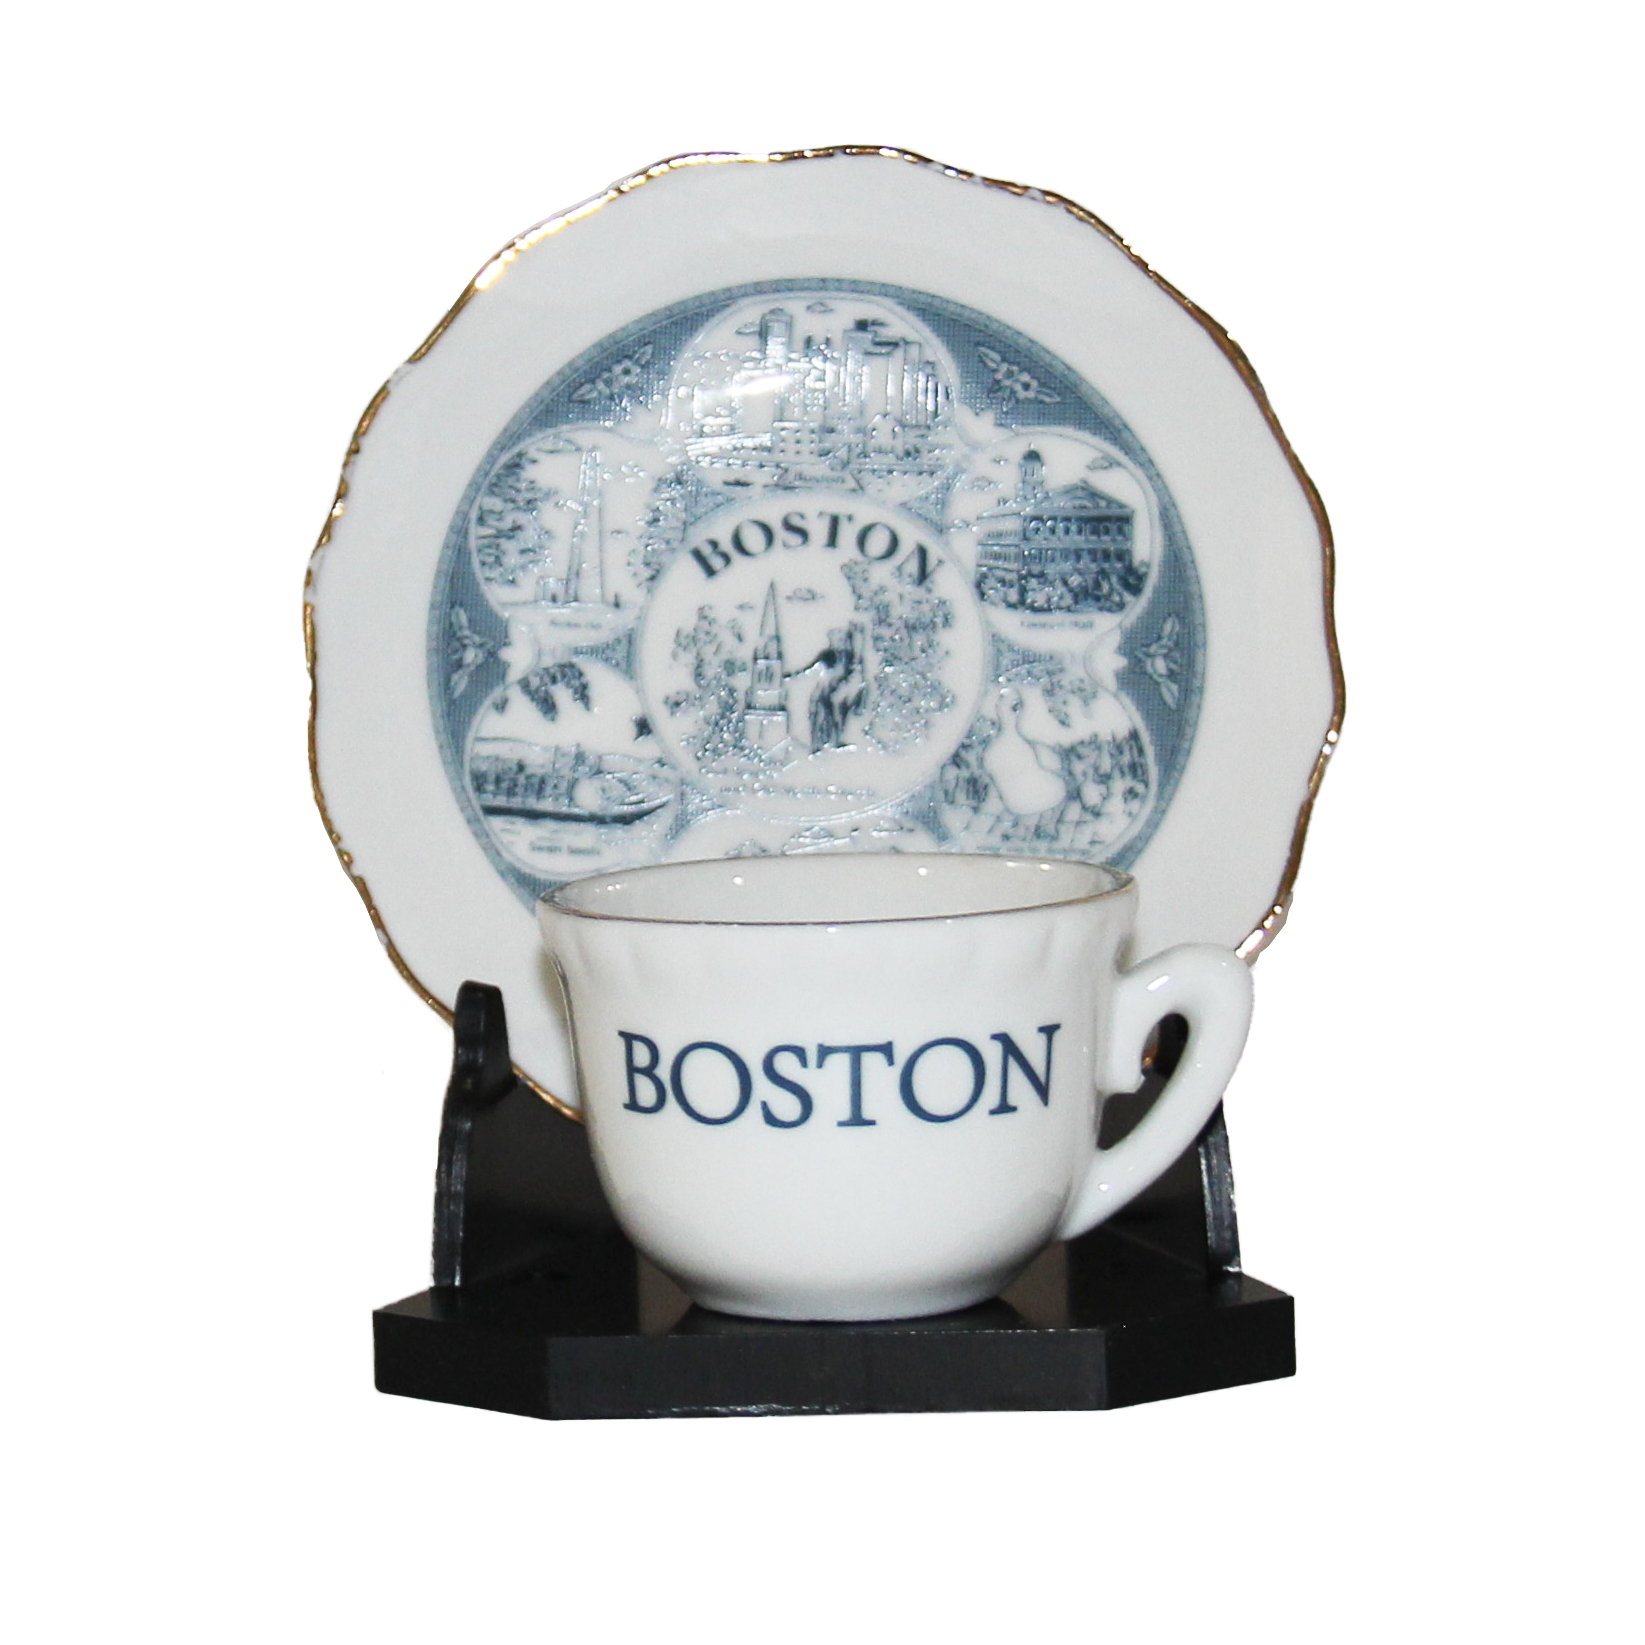 Boston Mini Cup and Saucer Set - Delft Blue, photo-1